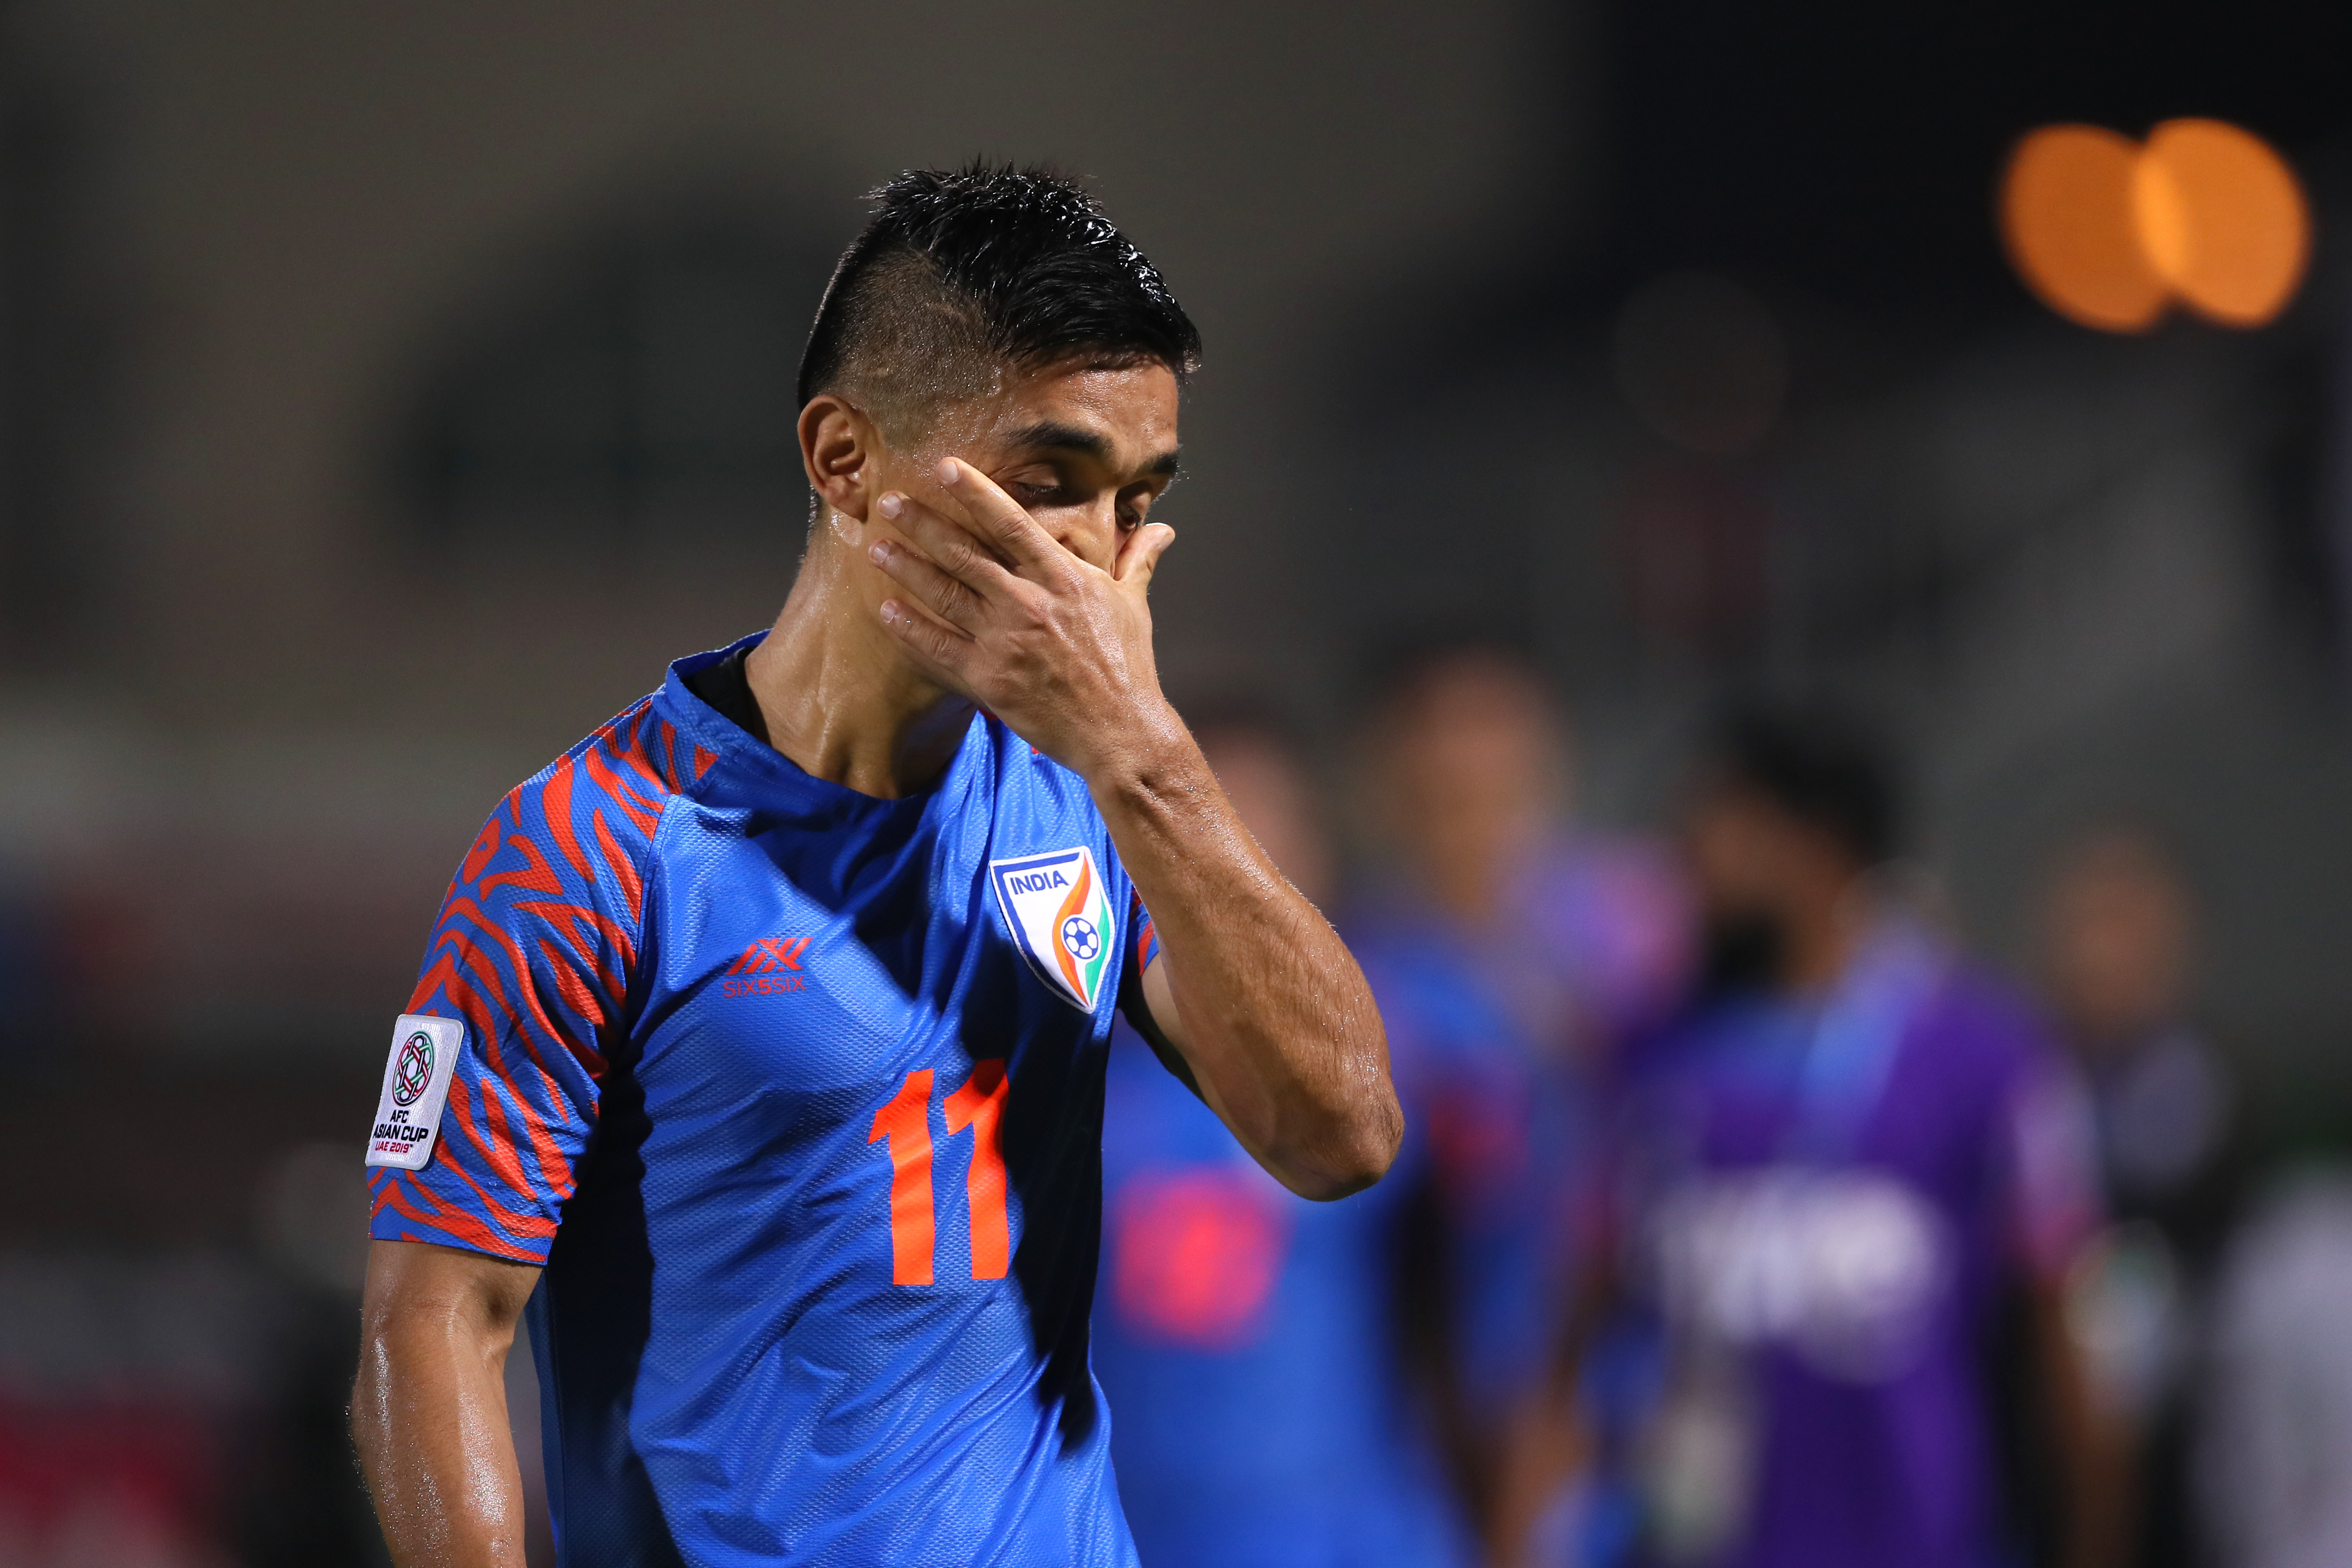 Football is last thing on my mind at present, admits Sunil Chhteri